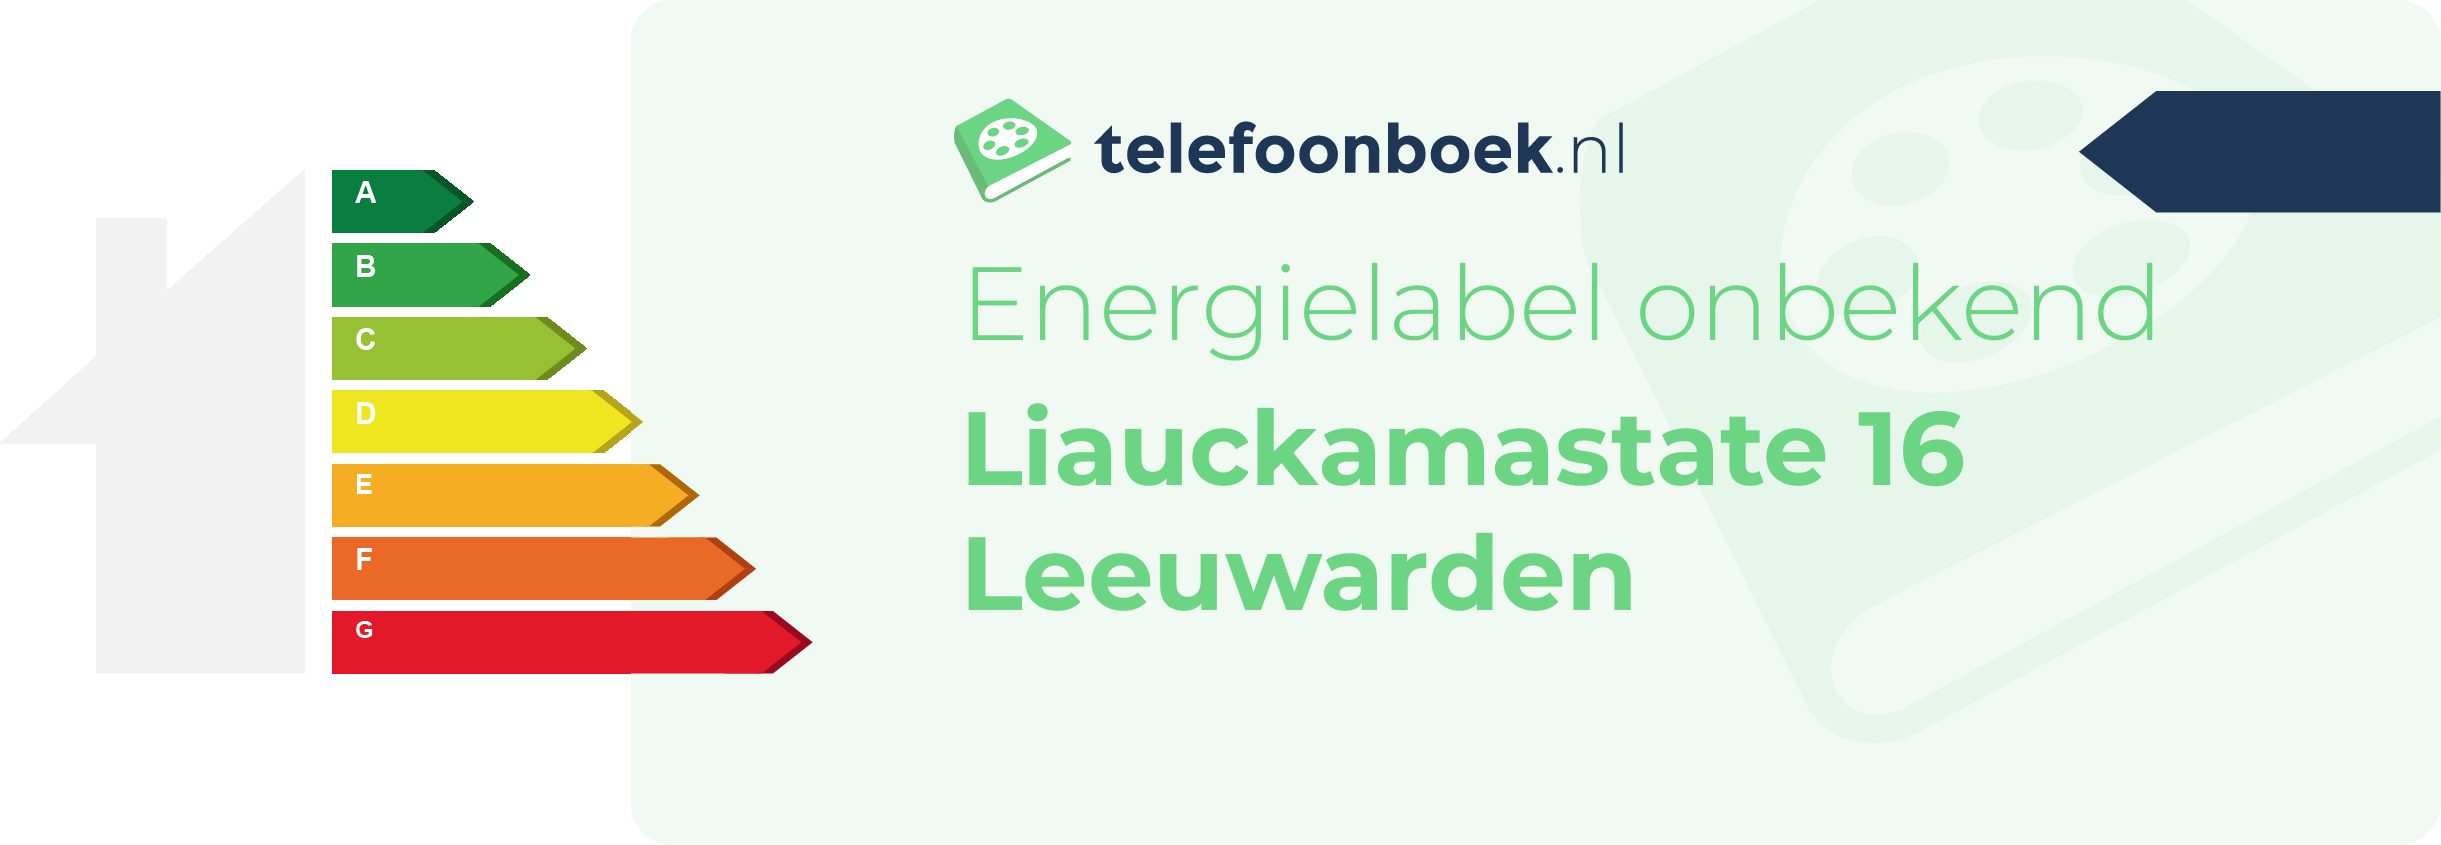 Energielabel Liauckamastate 16 Leeuwarden